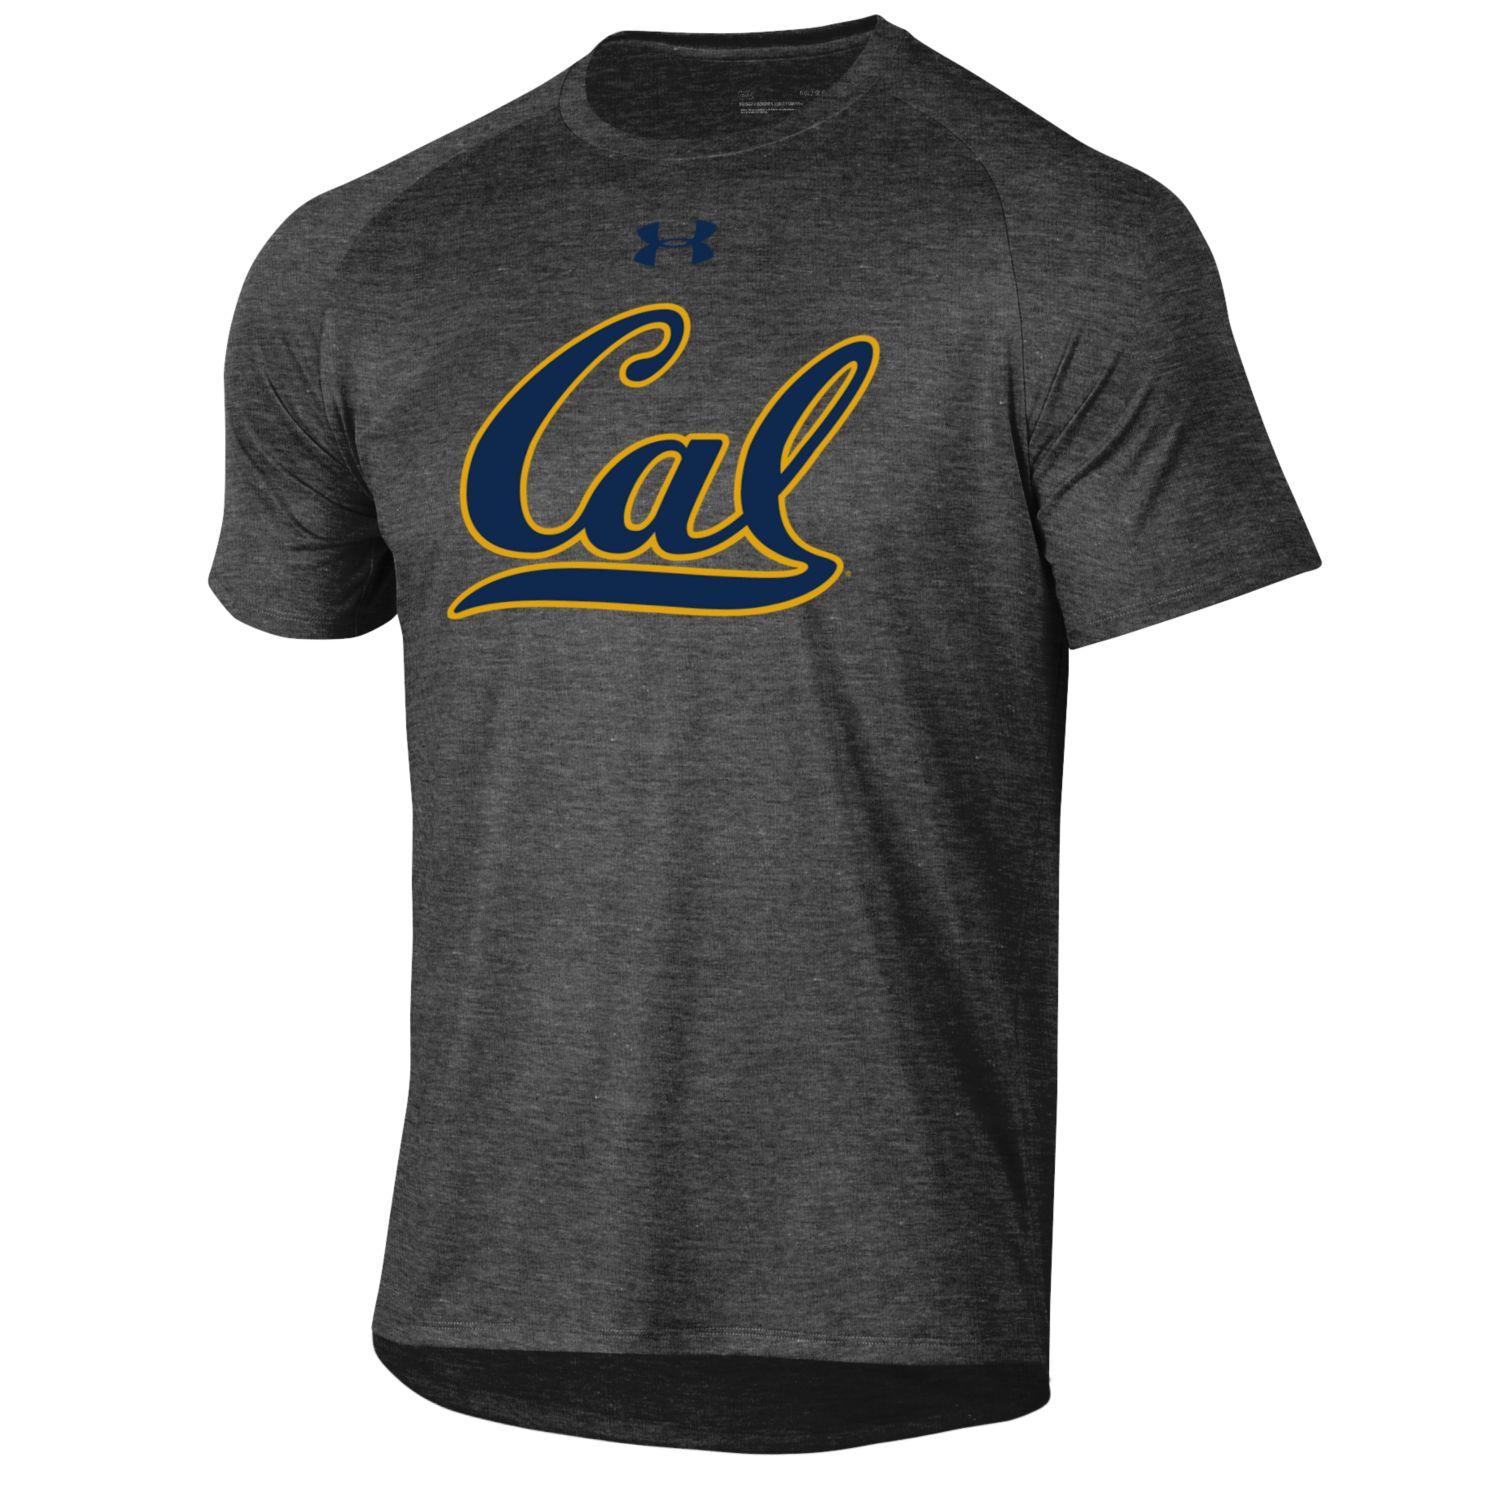 U.C. Berkeley Cal Under Armour Performance T-Shirt-Charcoal-Shop College Wear